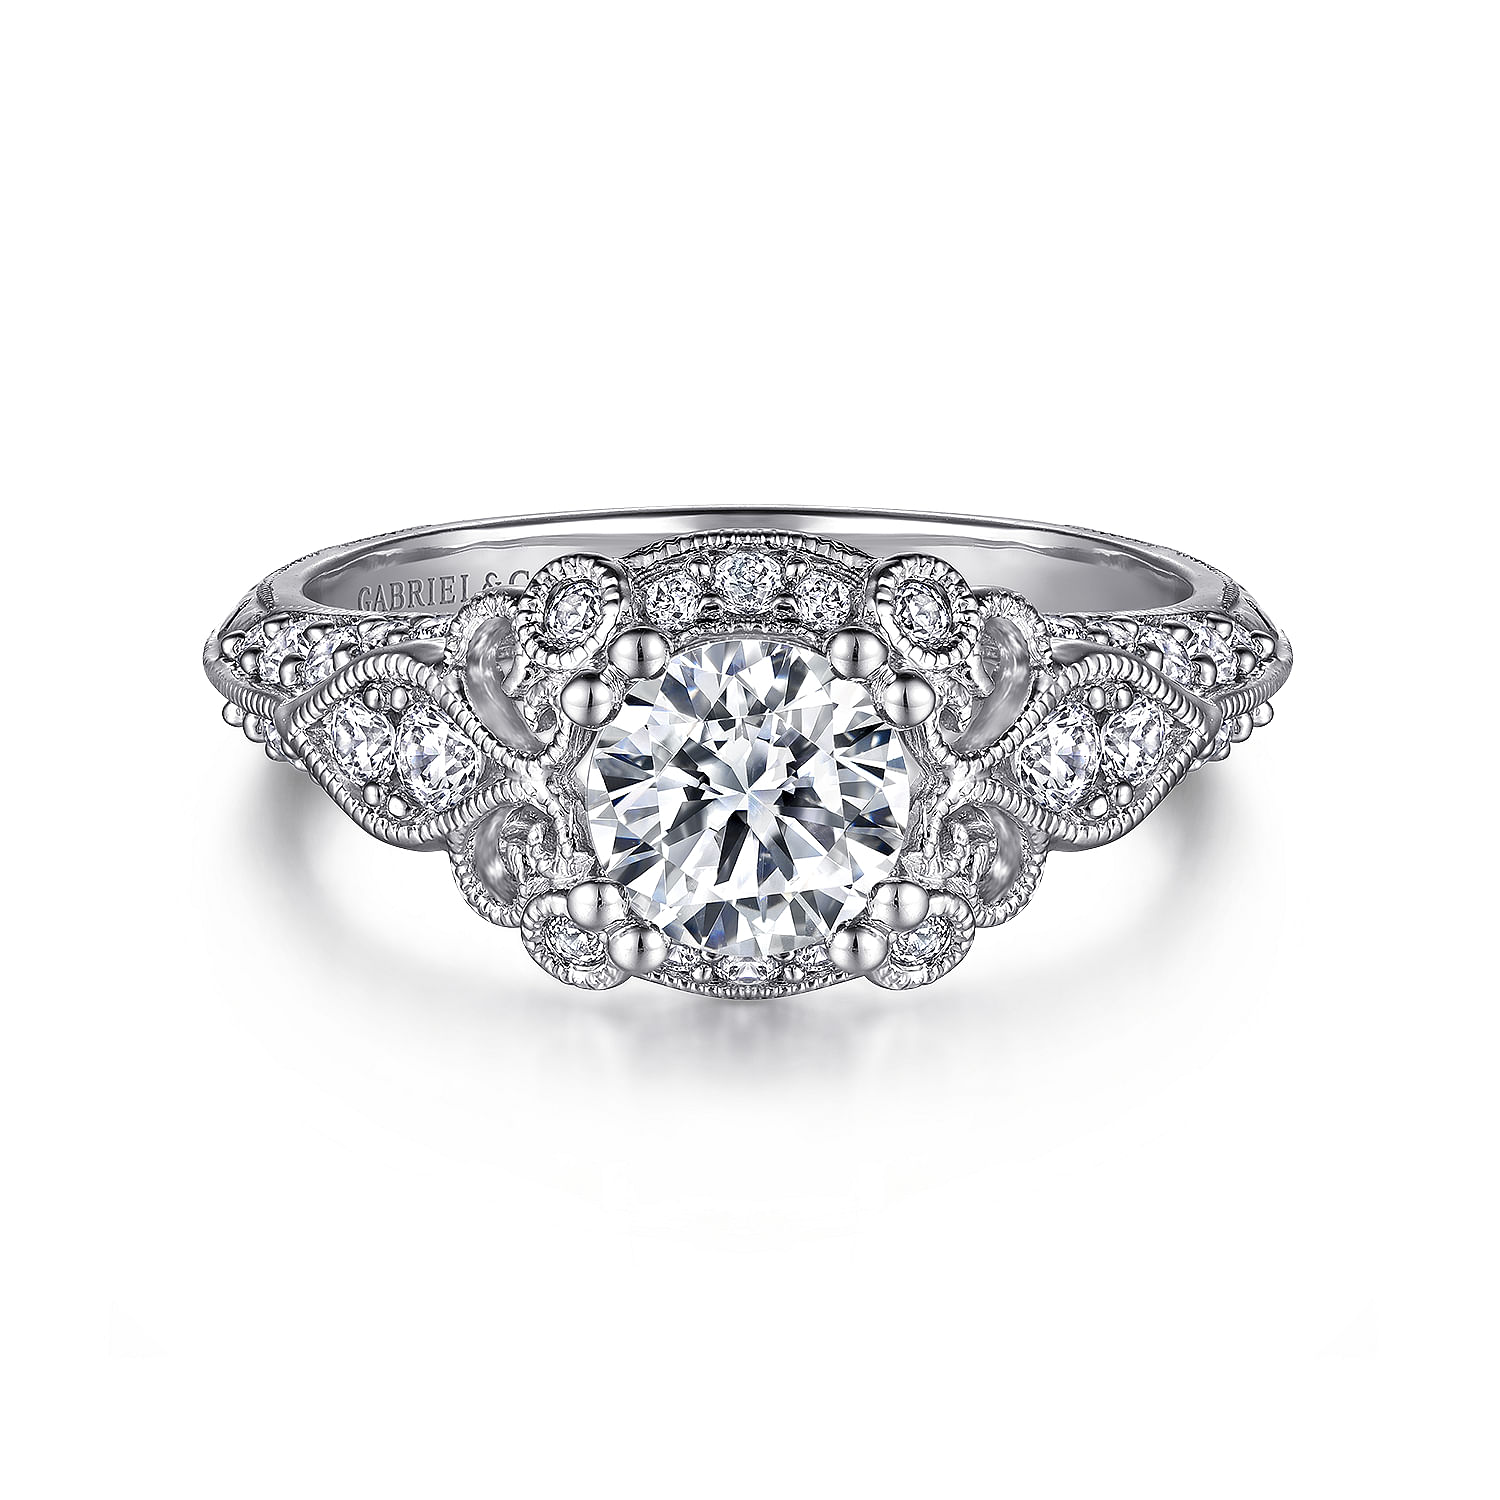 Abel - Unique 14K White Gold Vintage Inspired Diamond Halo Engagement Ring